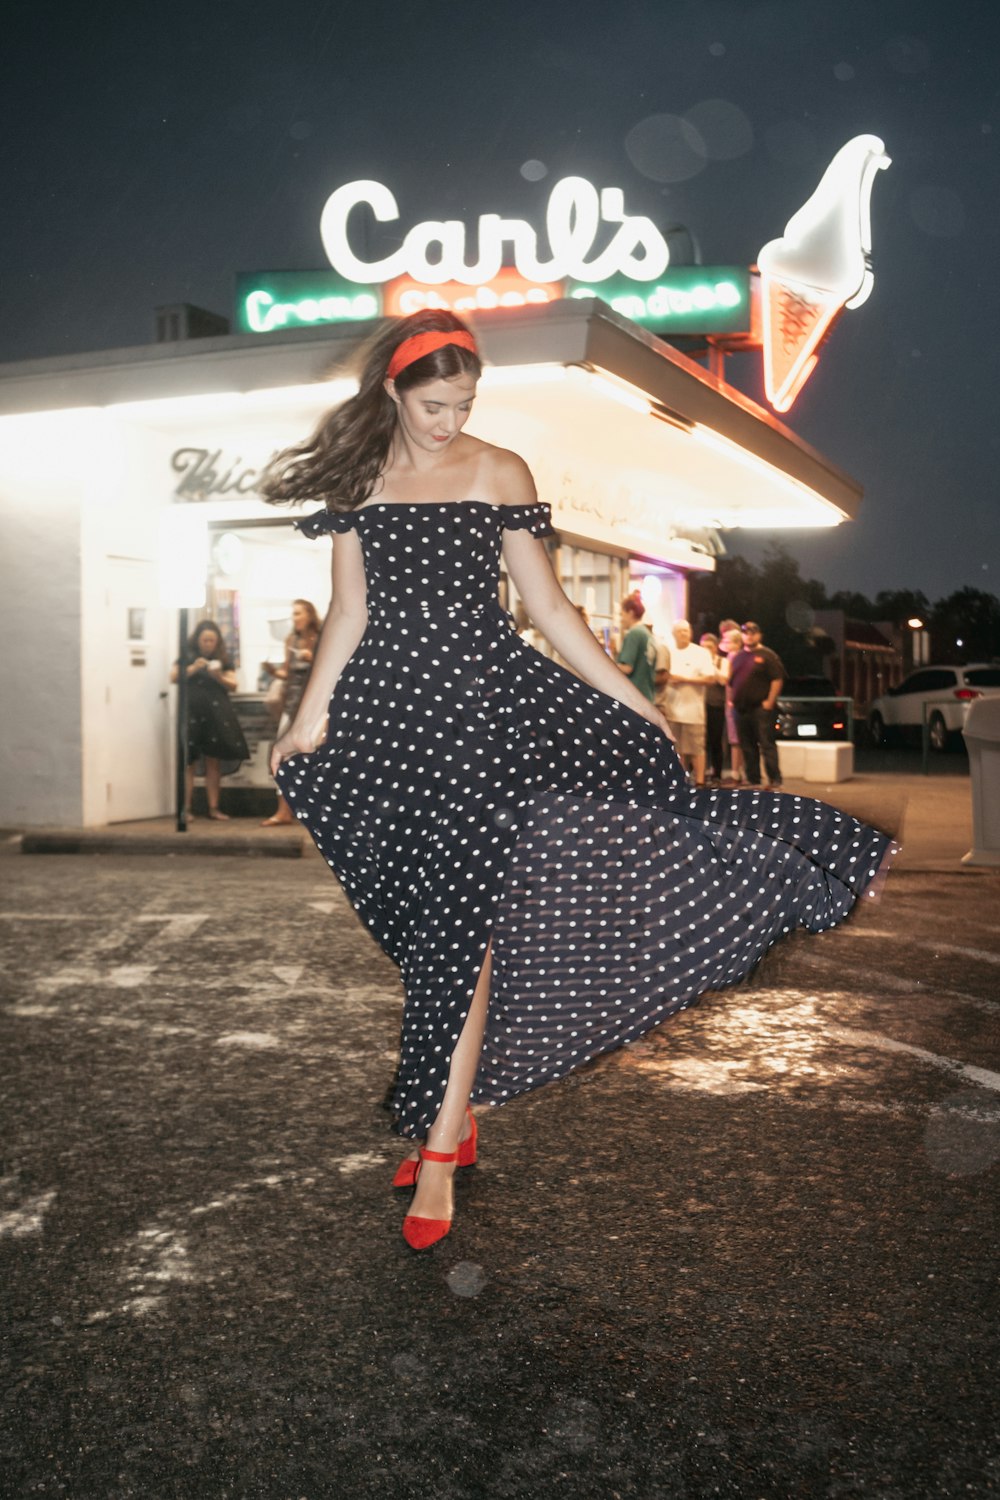 woman wearing polka-dot dress standing on ground